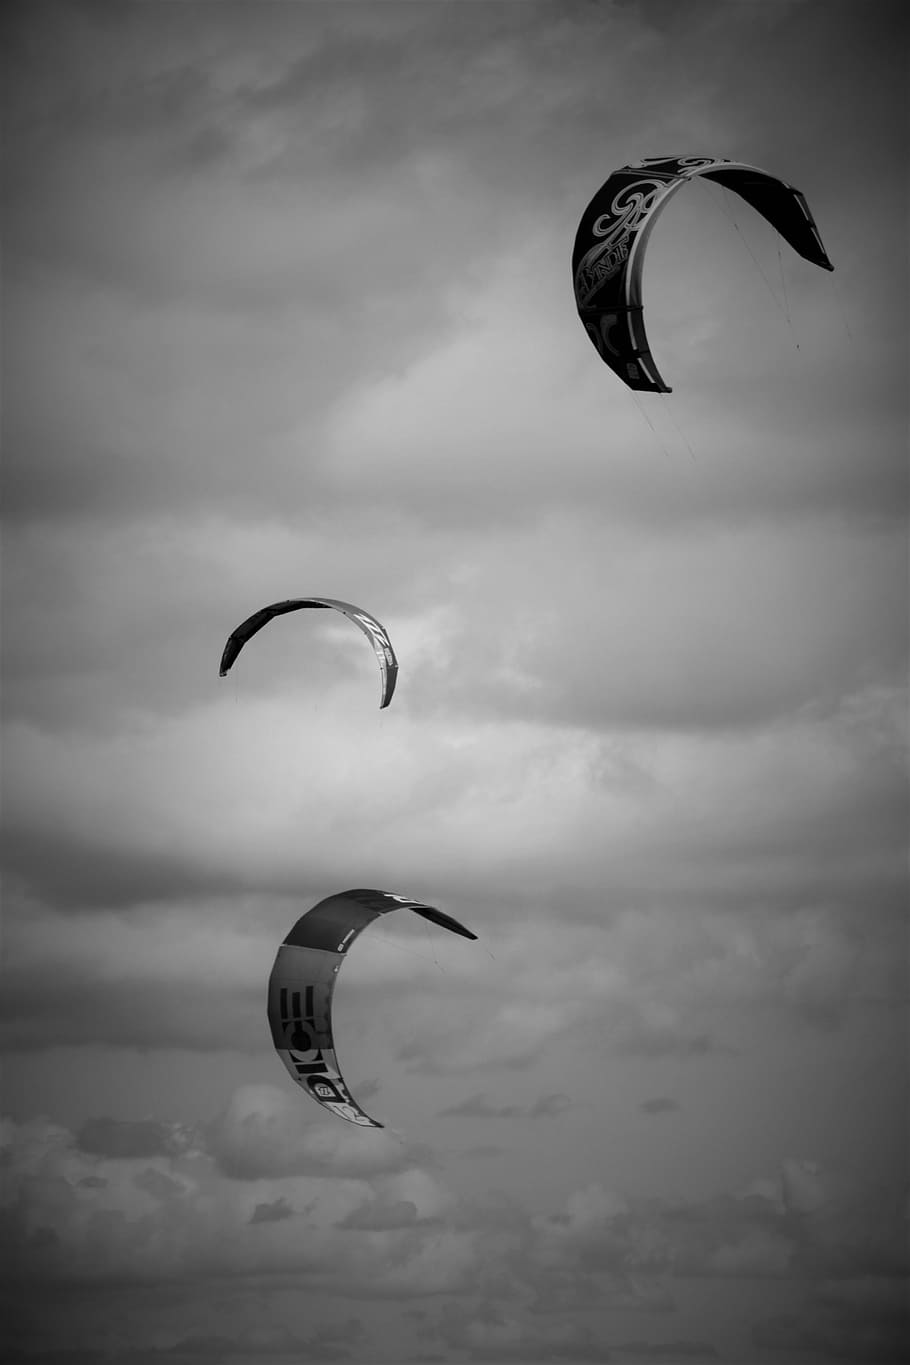 Sea, Kitesurf, Windsurfing, Vela, Sky, holiday, sport, kite surfing